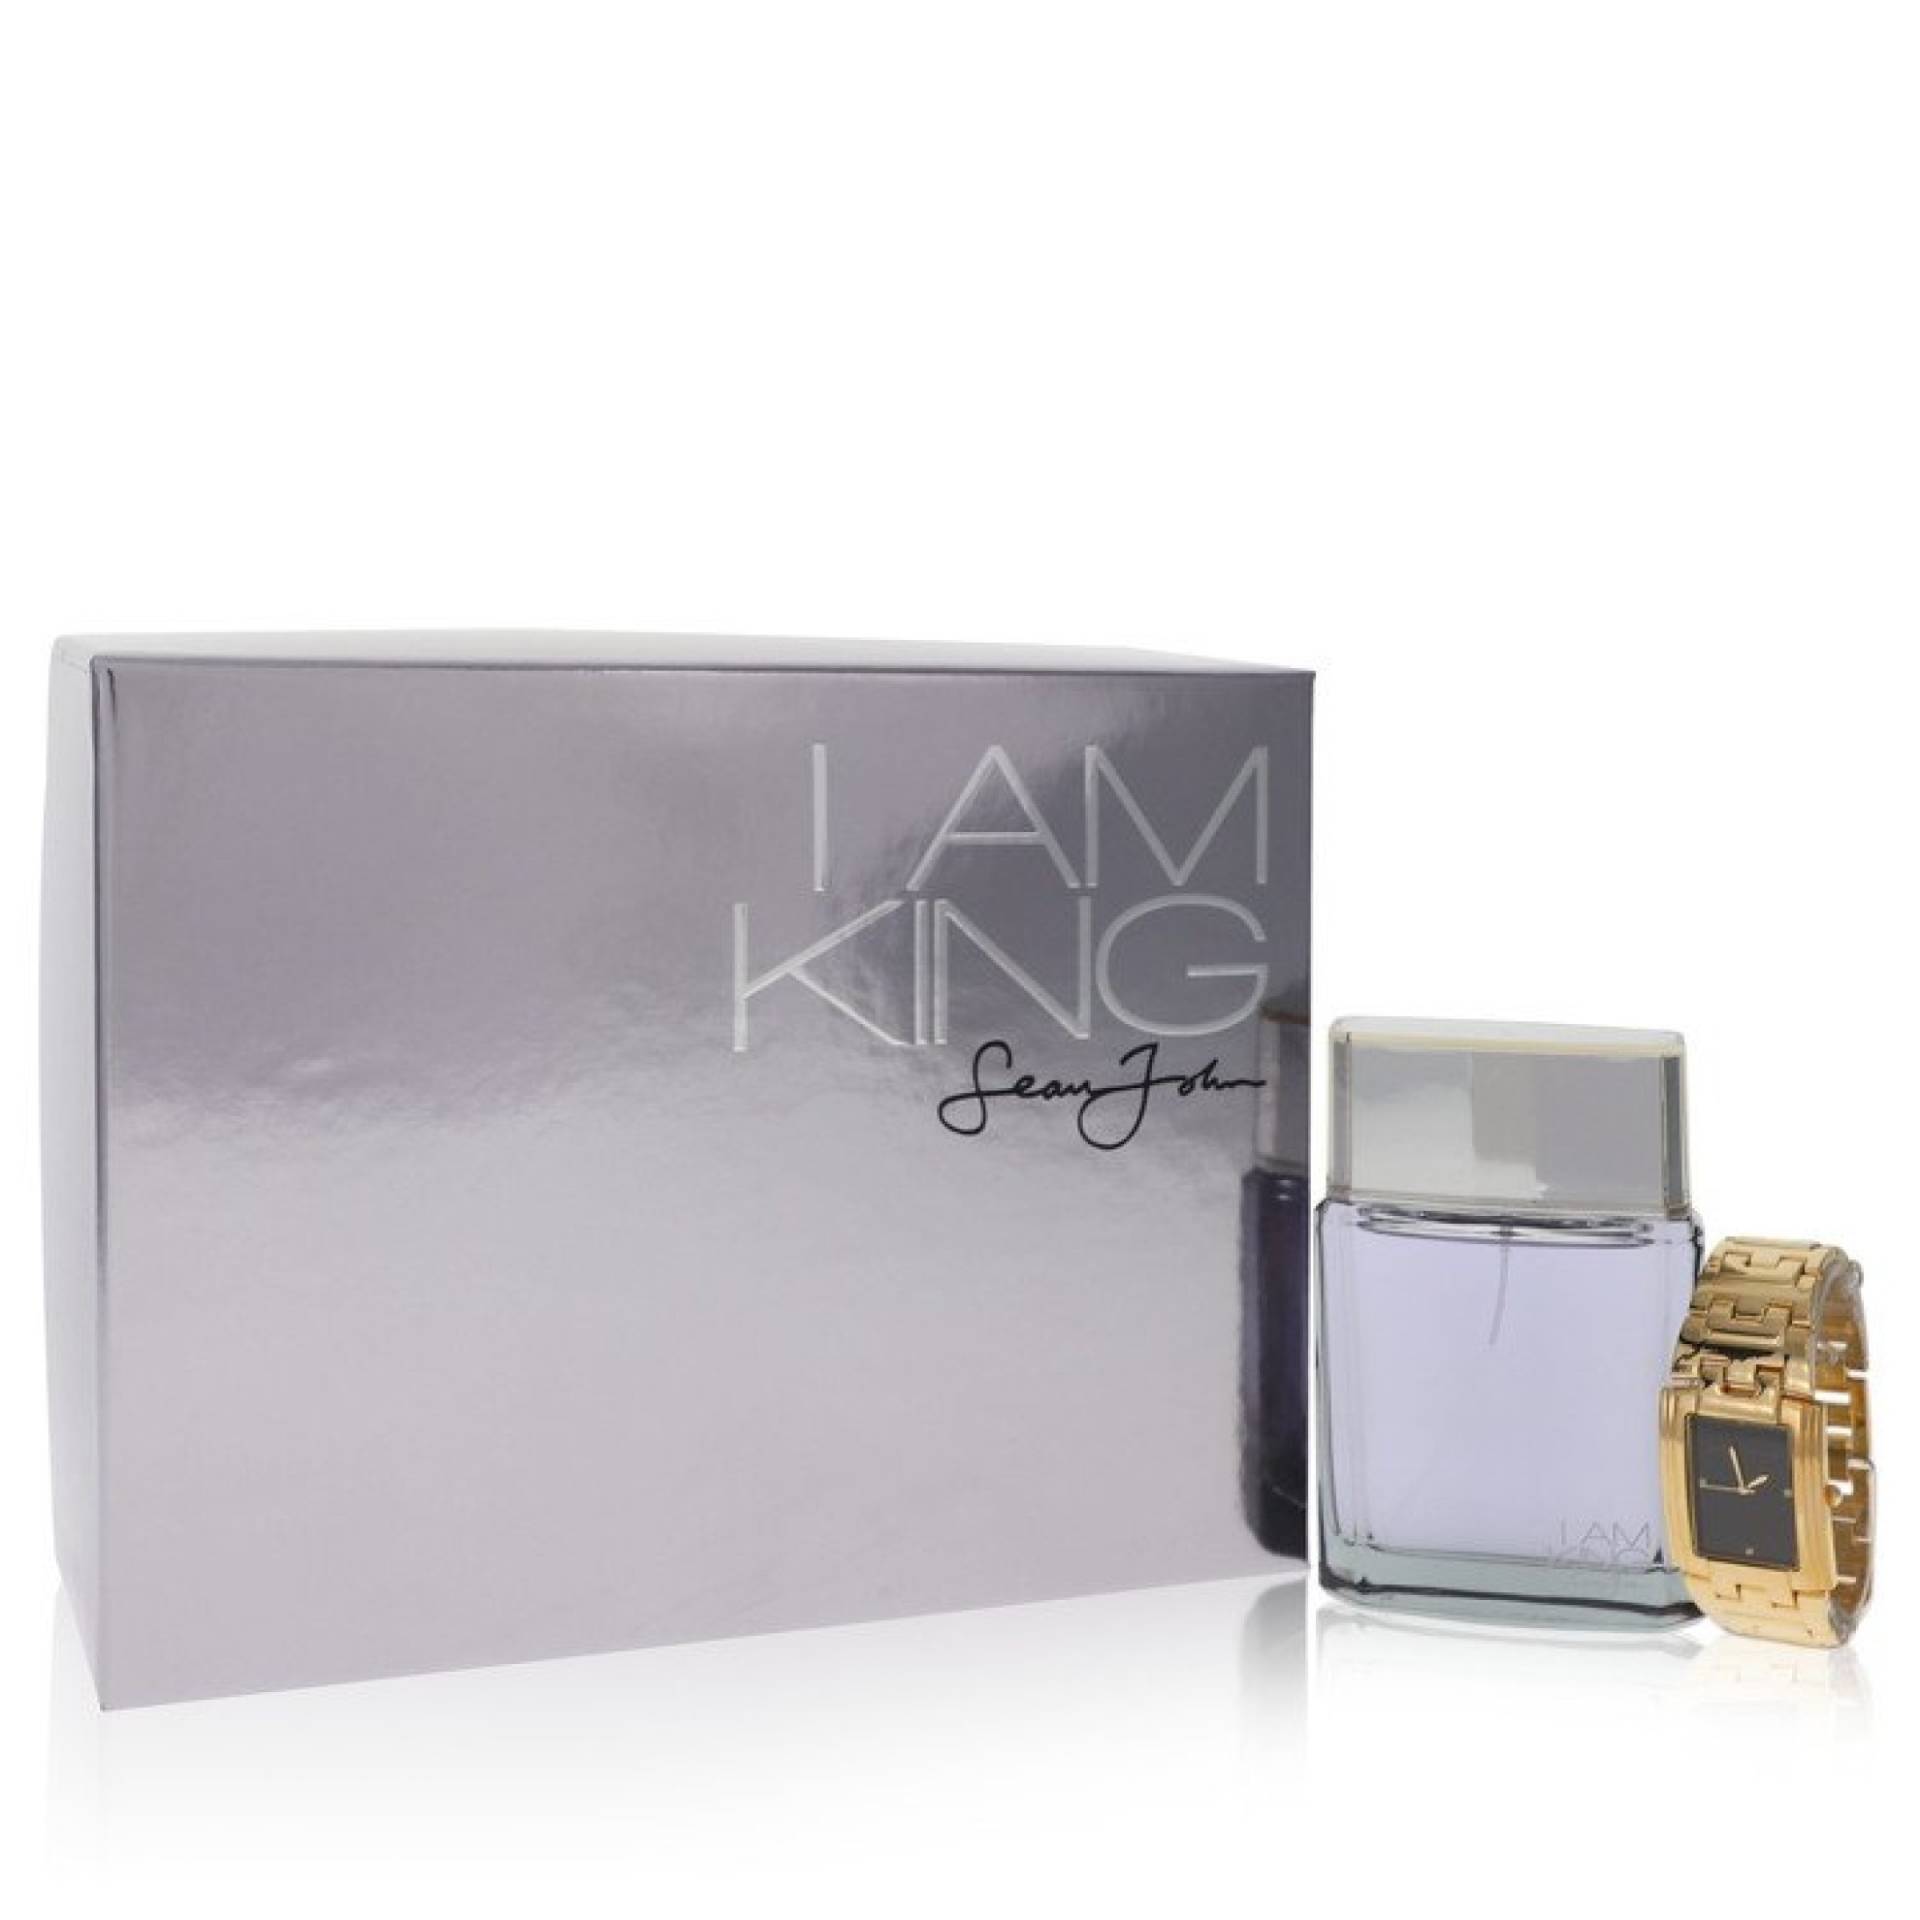 Sean John I Am King Gift Set -- 100 ml Eau De Toilette Spreay + Watch von Sean John